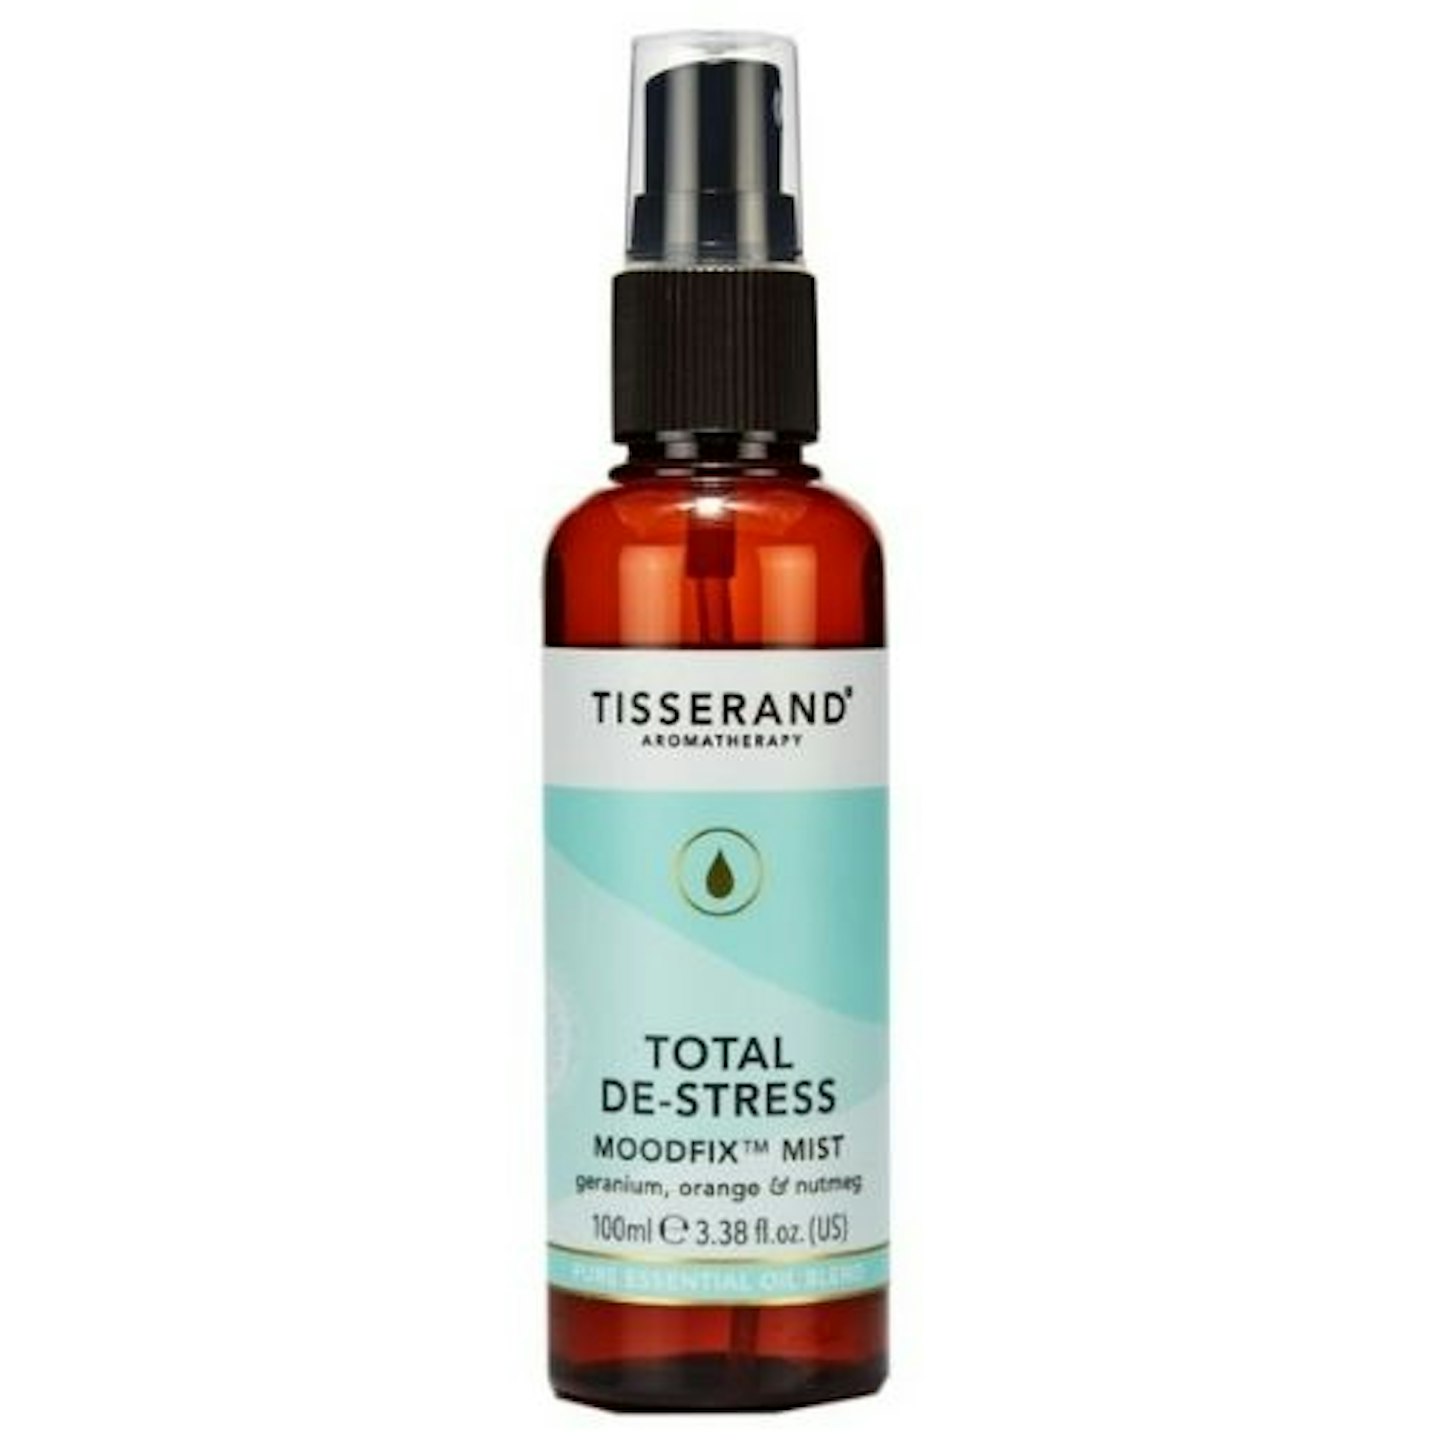 Tisserand Aromatherapy Total De-Stress Moodfix Mist